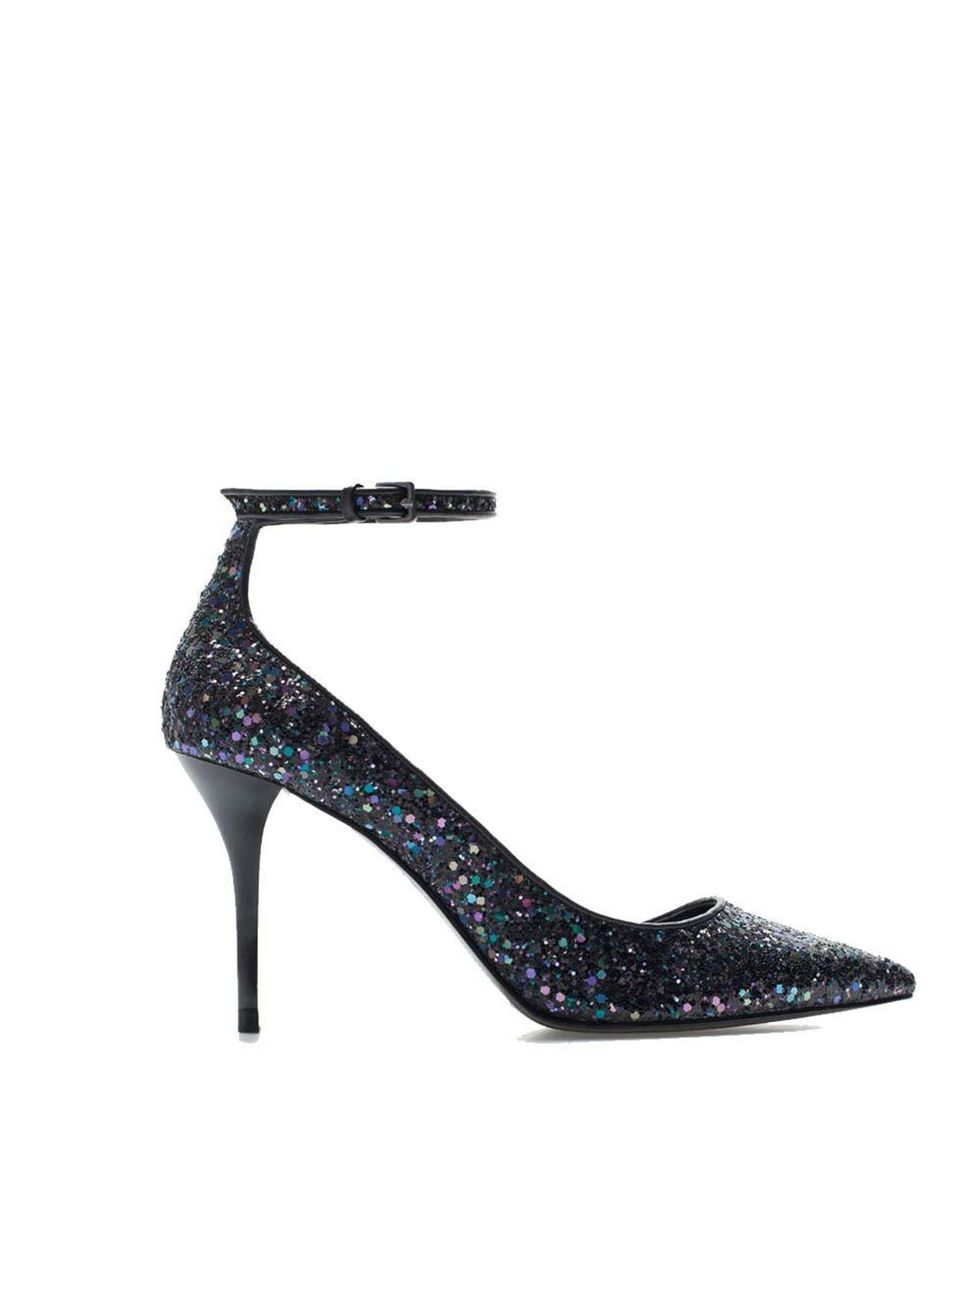 <p><a href="http://www.zara.com/uk/en/woman/shoes/high-heels/high-heel-court-shoe-with-ankle-strap-c269195p2256545.html" target="_blank">Zara</a> Shoes, £39.99</p>